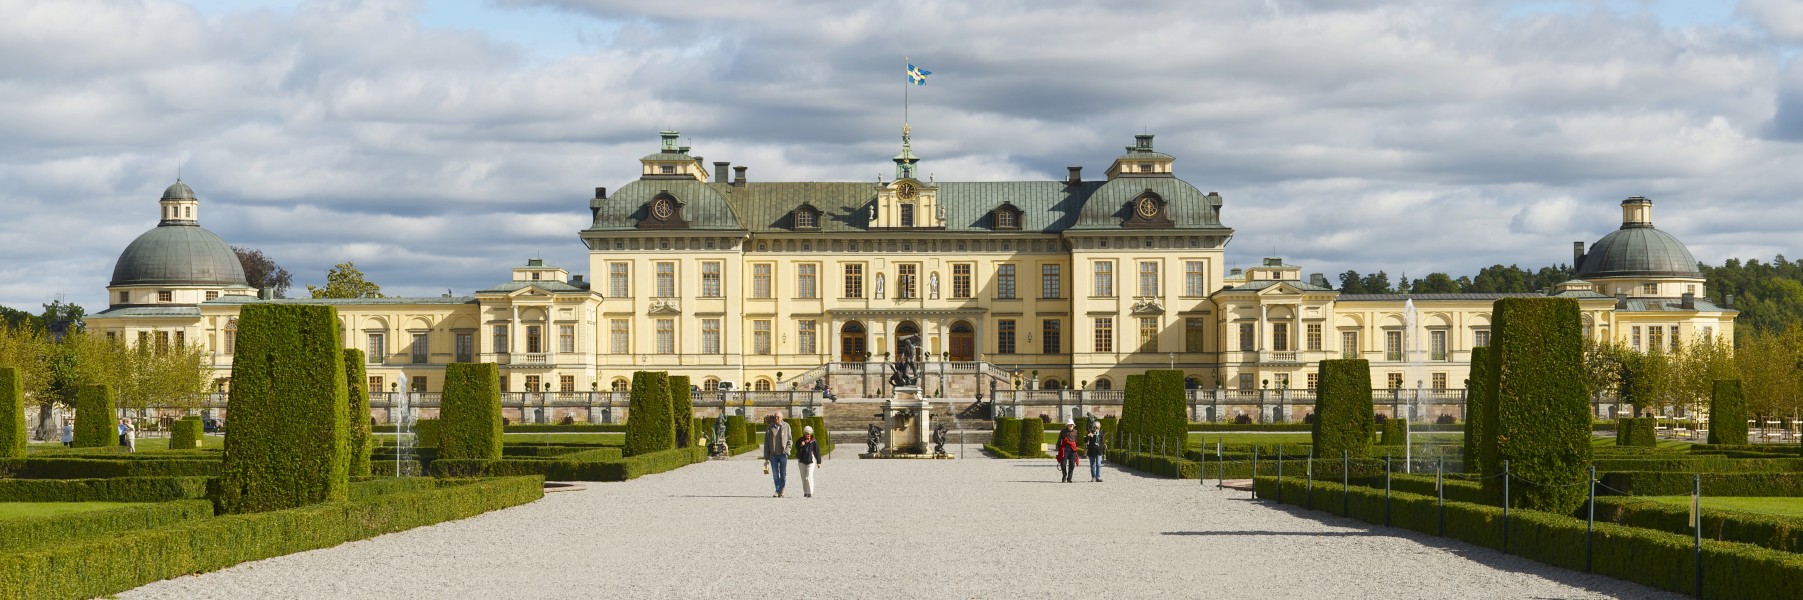 Drottningholm Palace - panorama september 2011